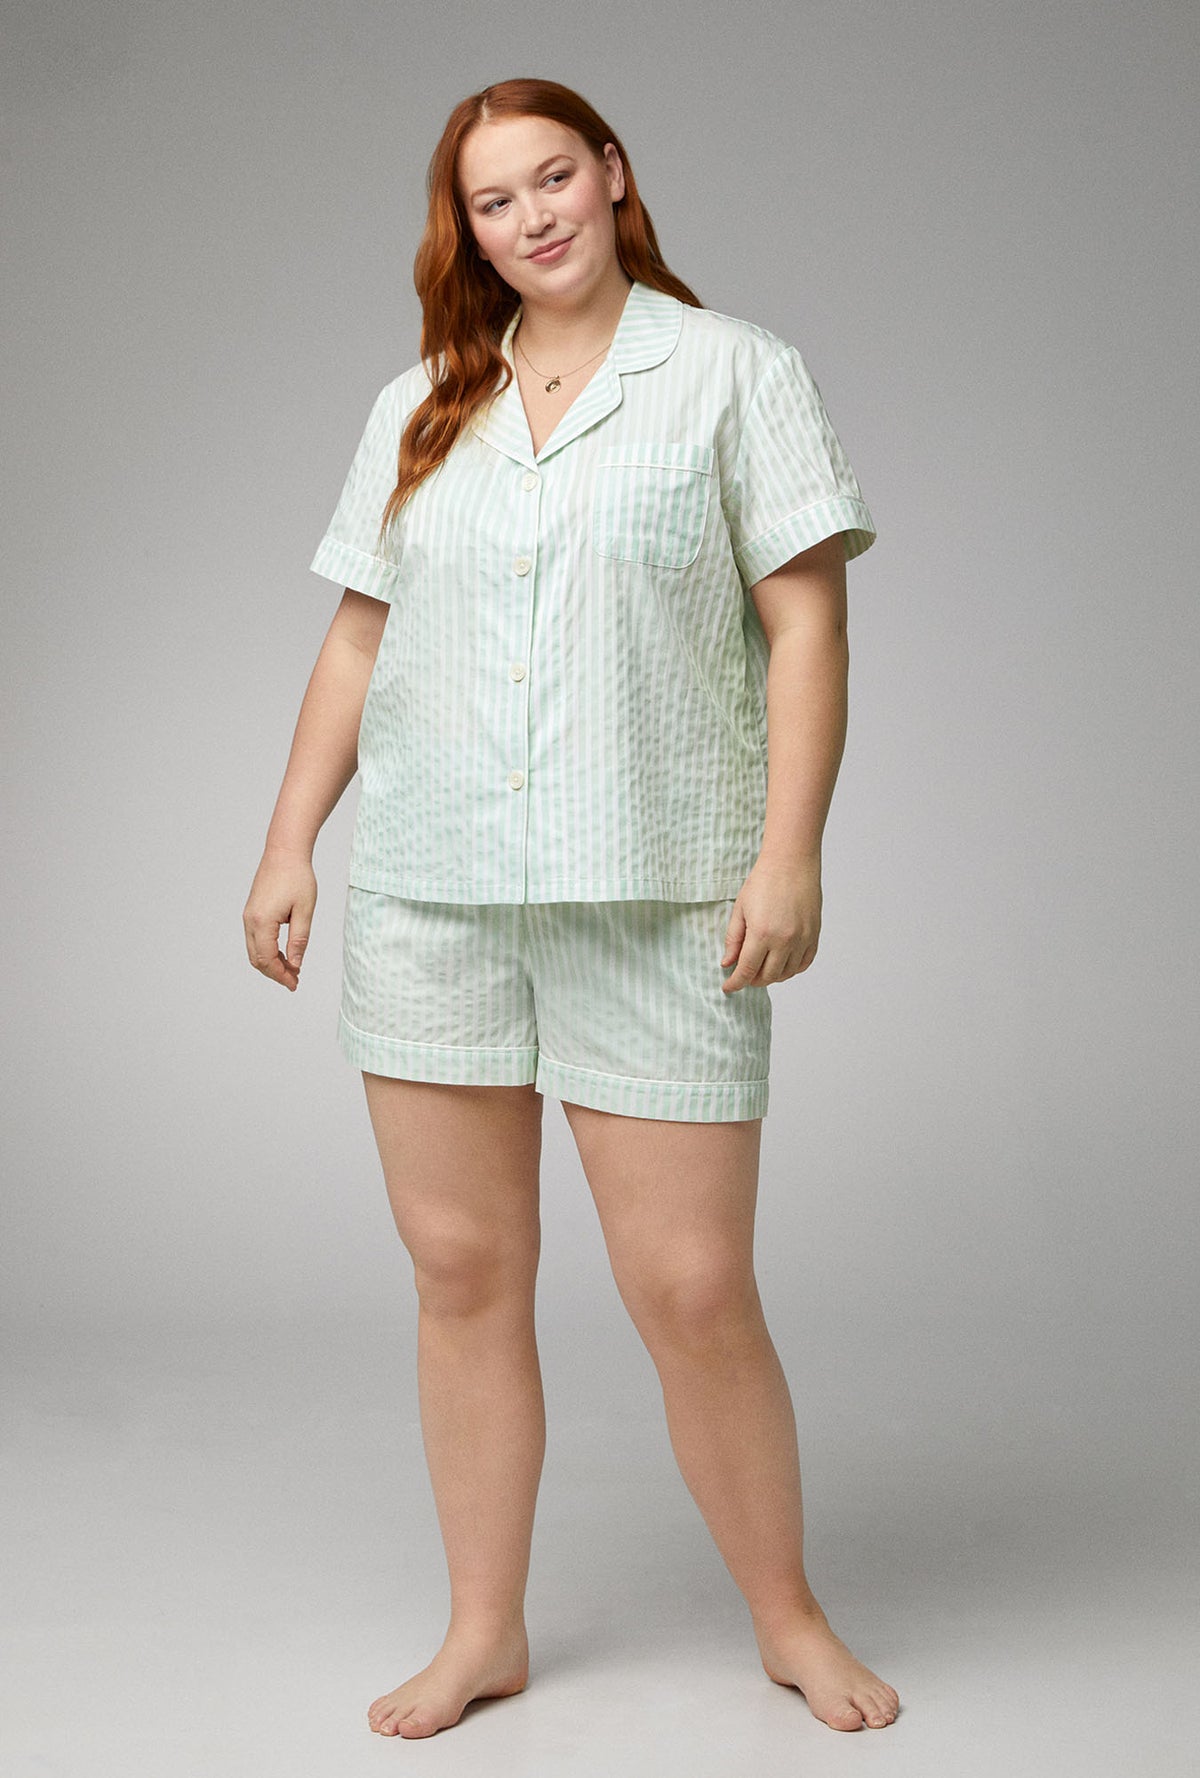 BedHead Pajamas Women's Classic Stripe Pajama Set, Blue 3D, XS at   Women's Clothing store